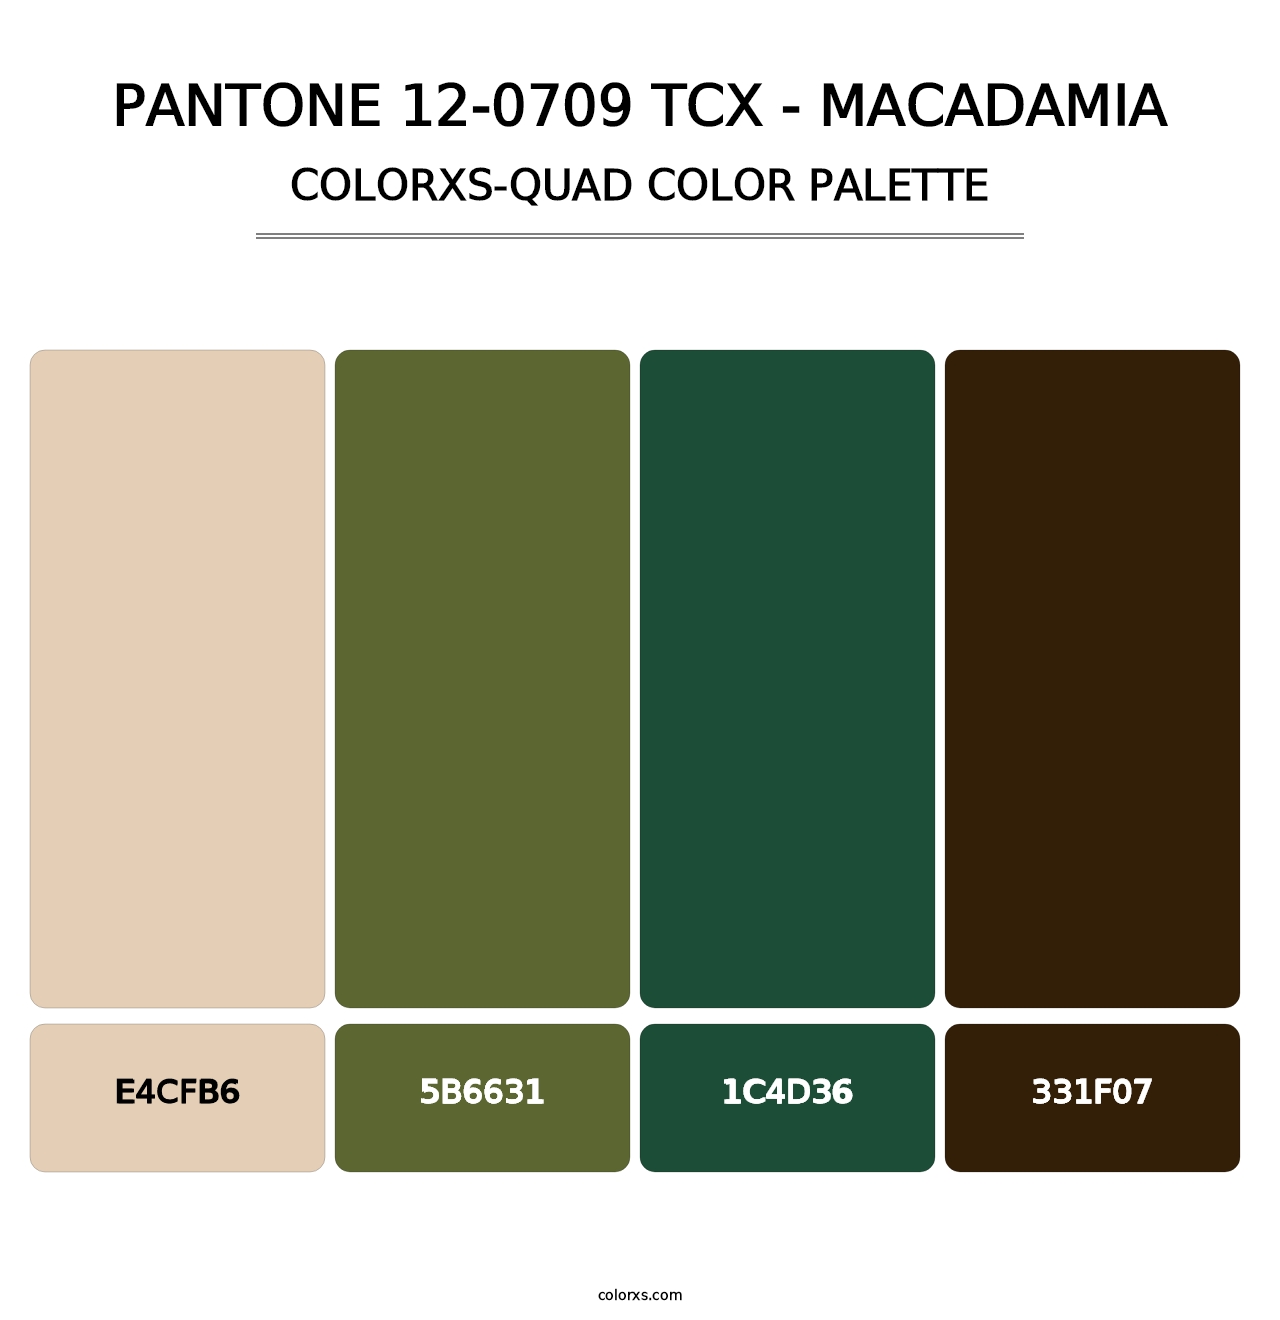 PANTONE 12-0709 TCX - Macadamia - Colorxs Quad Palette